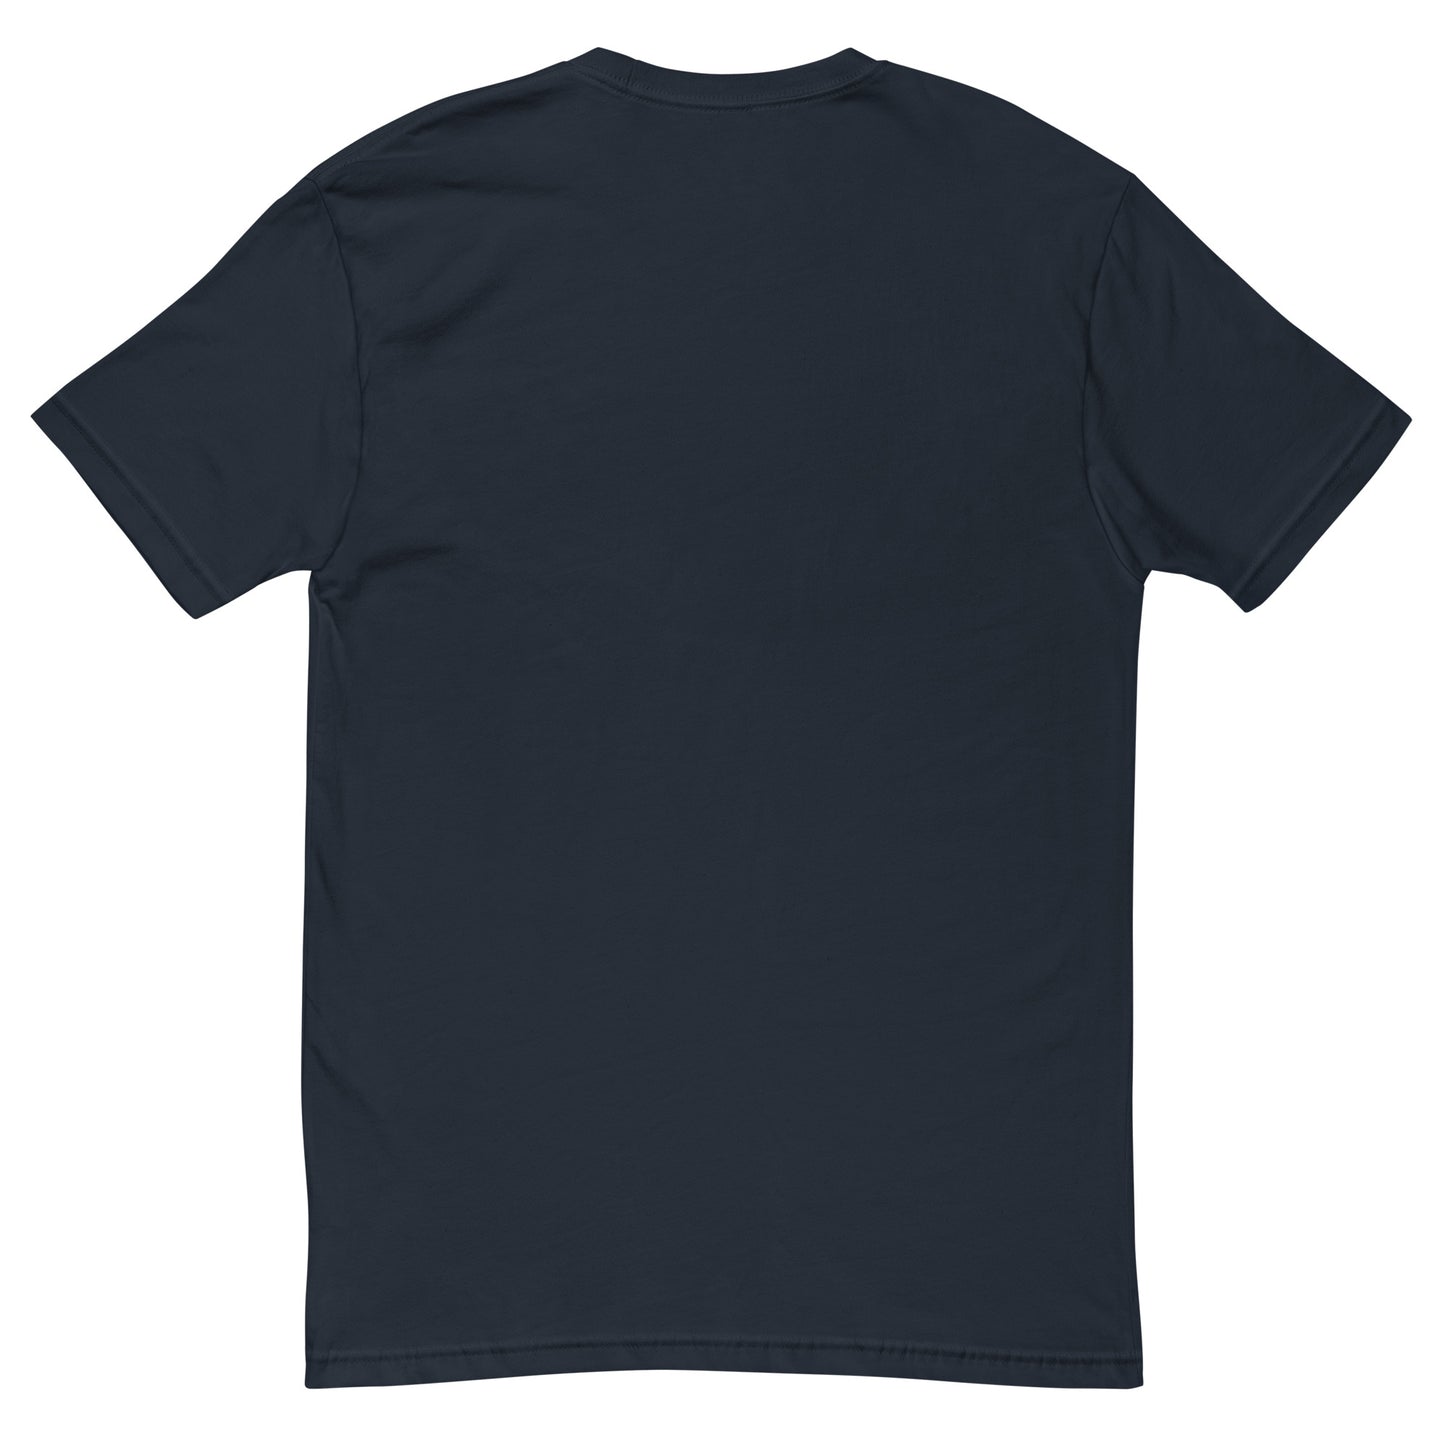 Rock Vintage NYC - Short Sleeve T-shirt